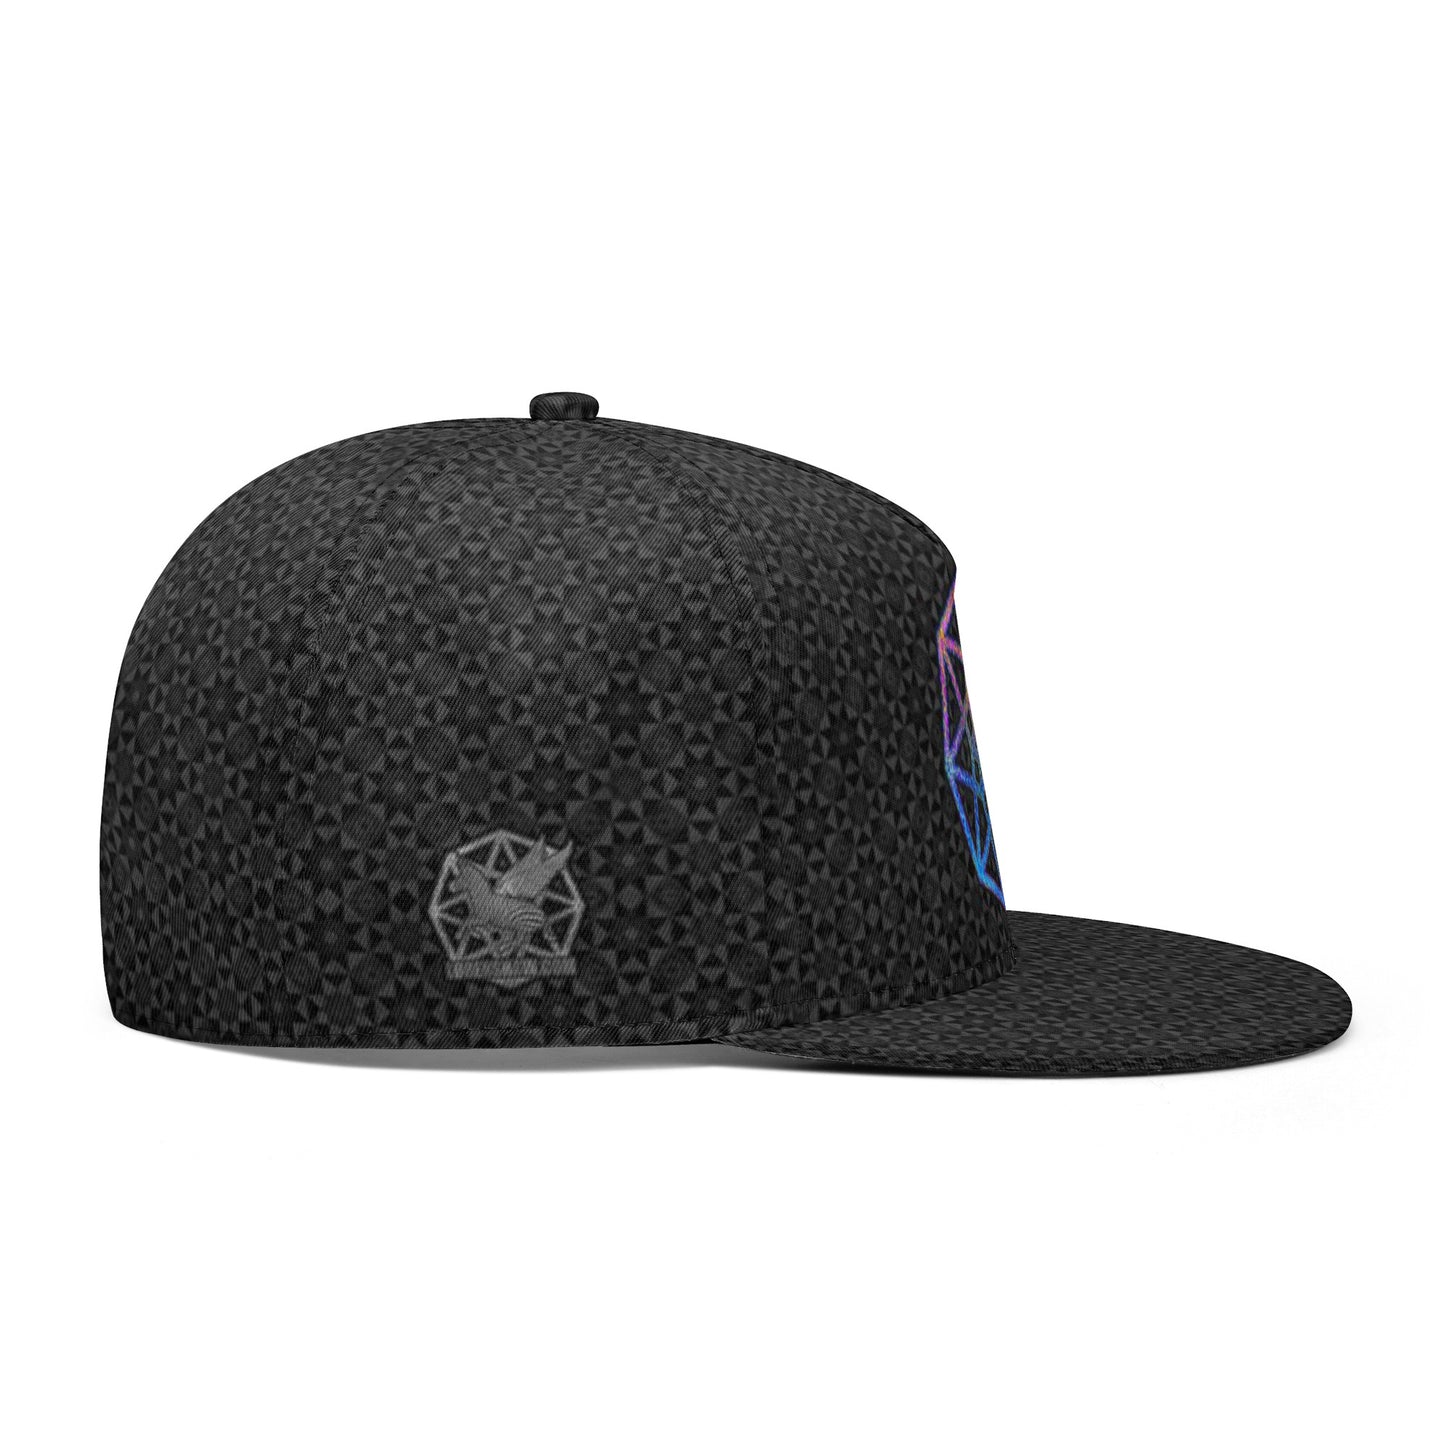 Black Tesseract Snapback Hat